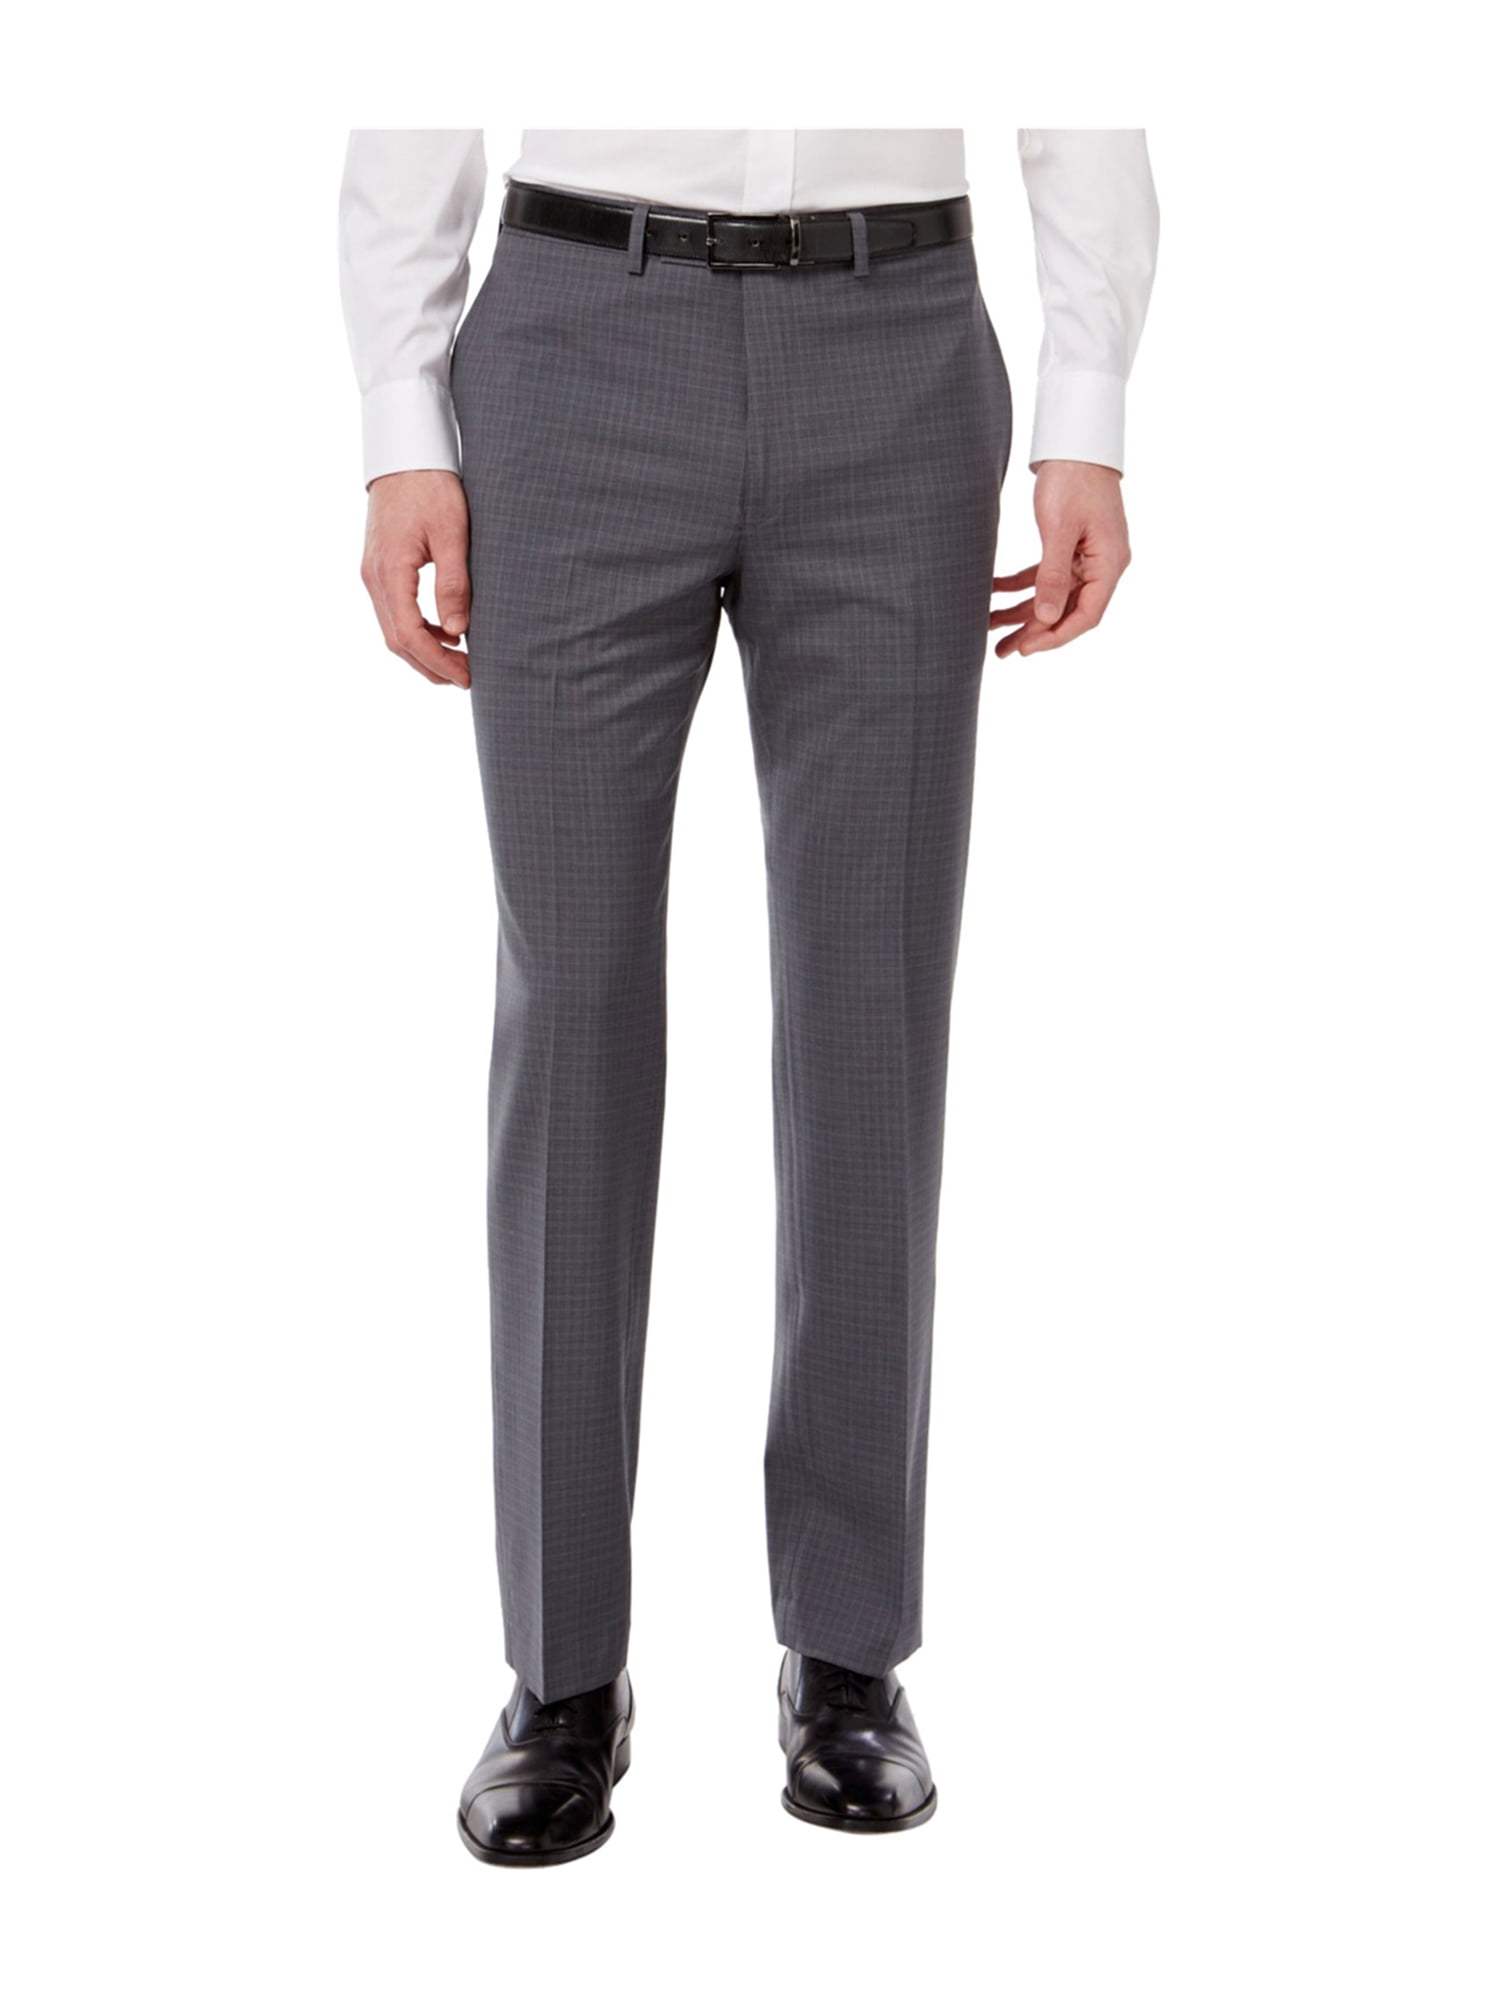 Calvin Klein Mens Plaid Dress Pants Slacks grey 30x34 | Walmart Canada